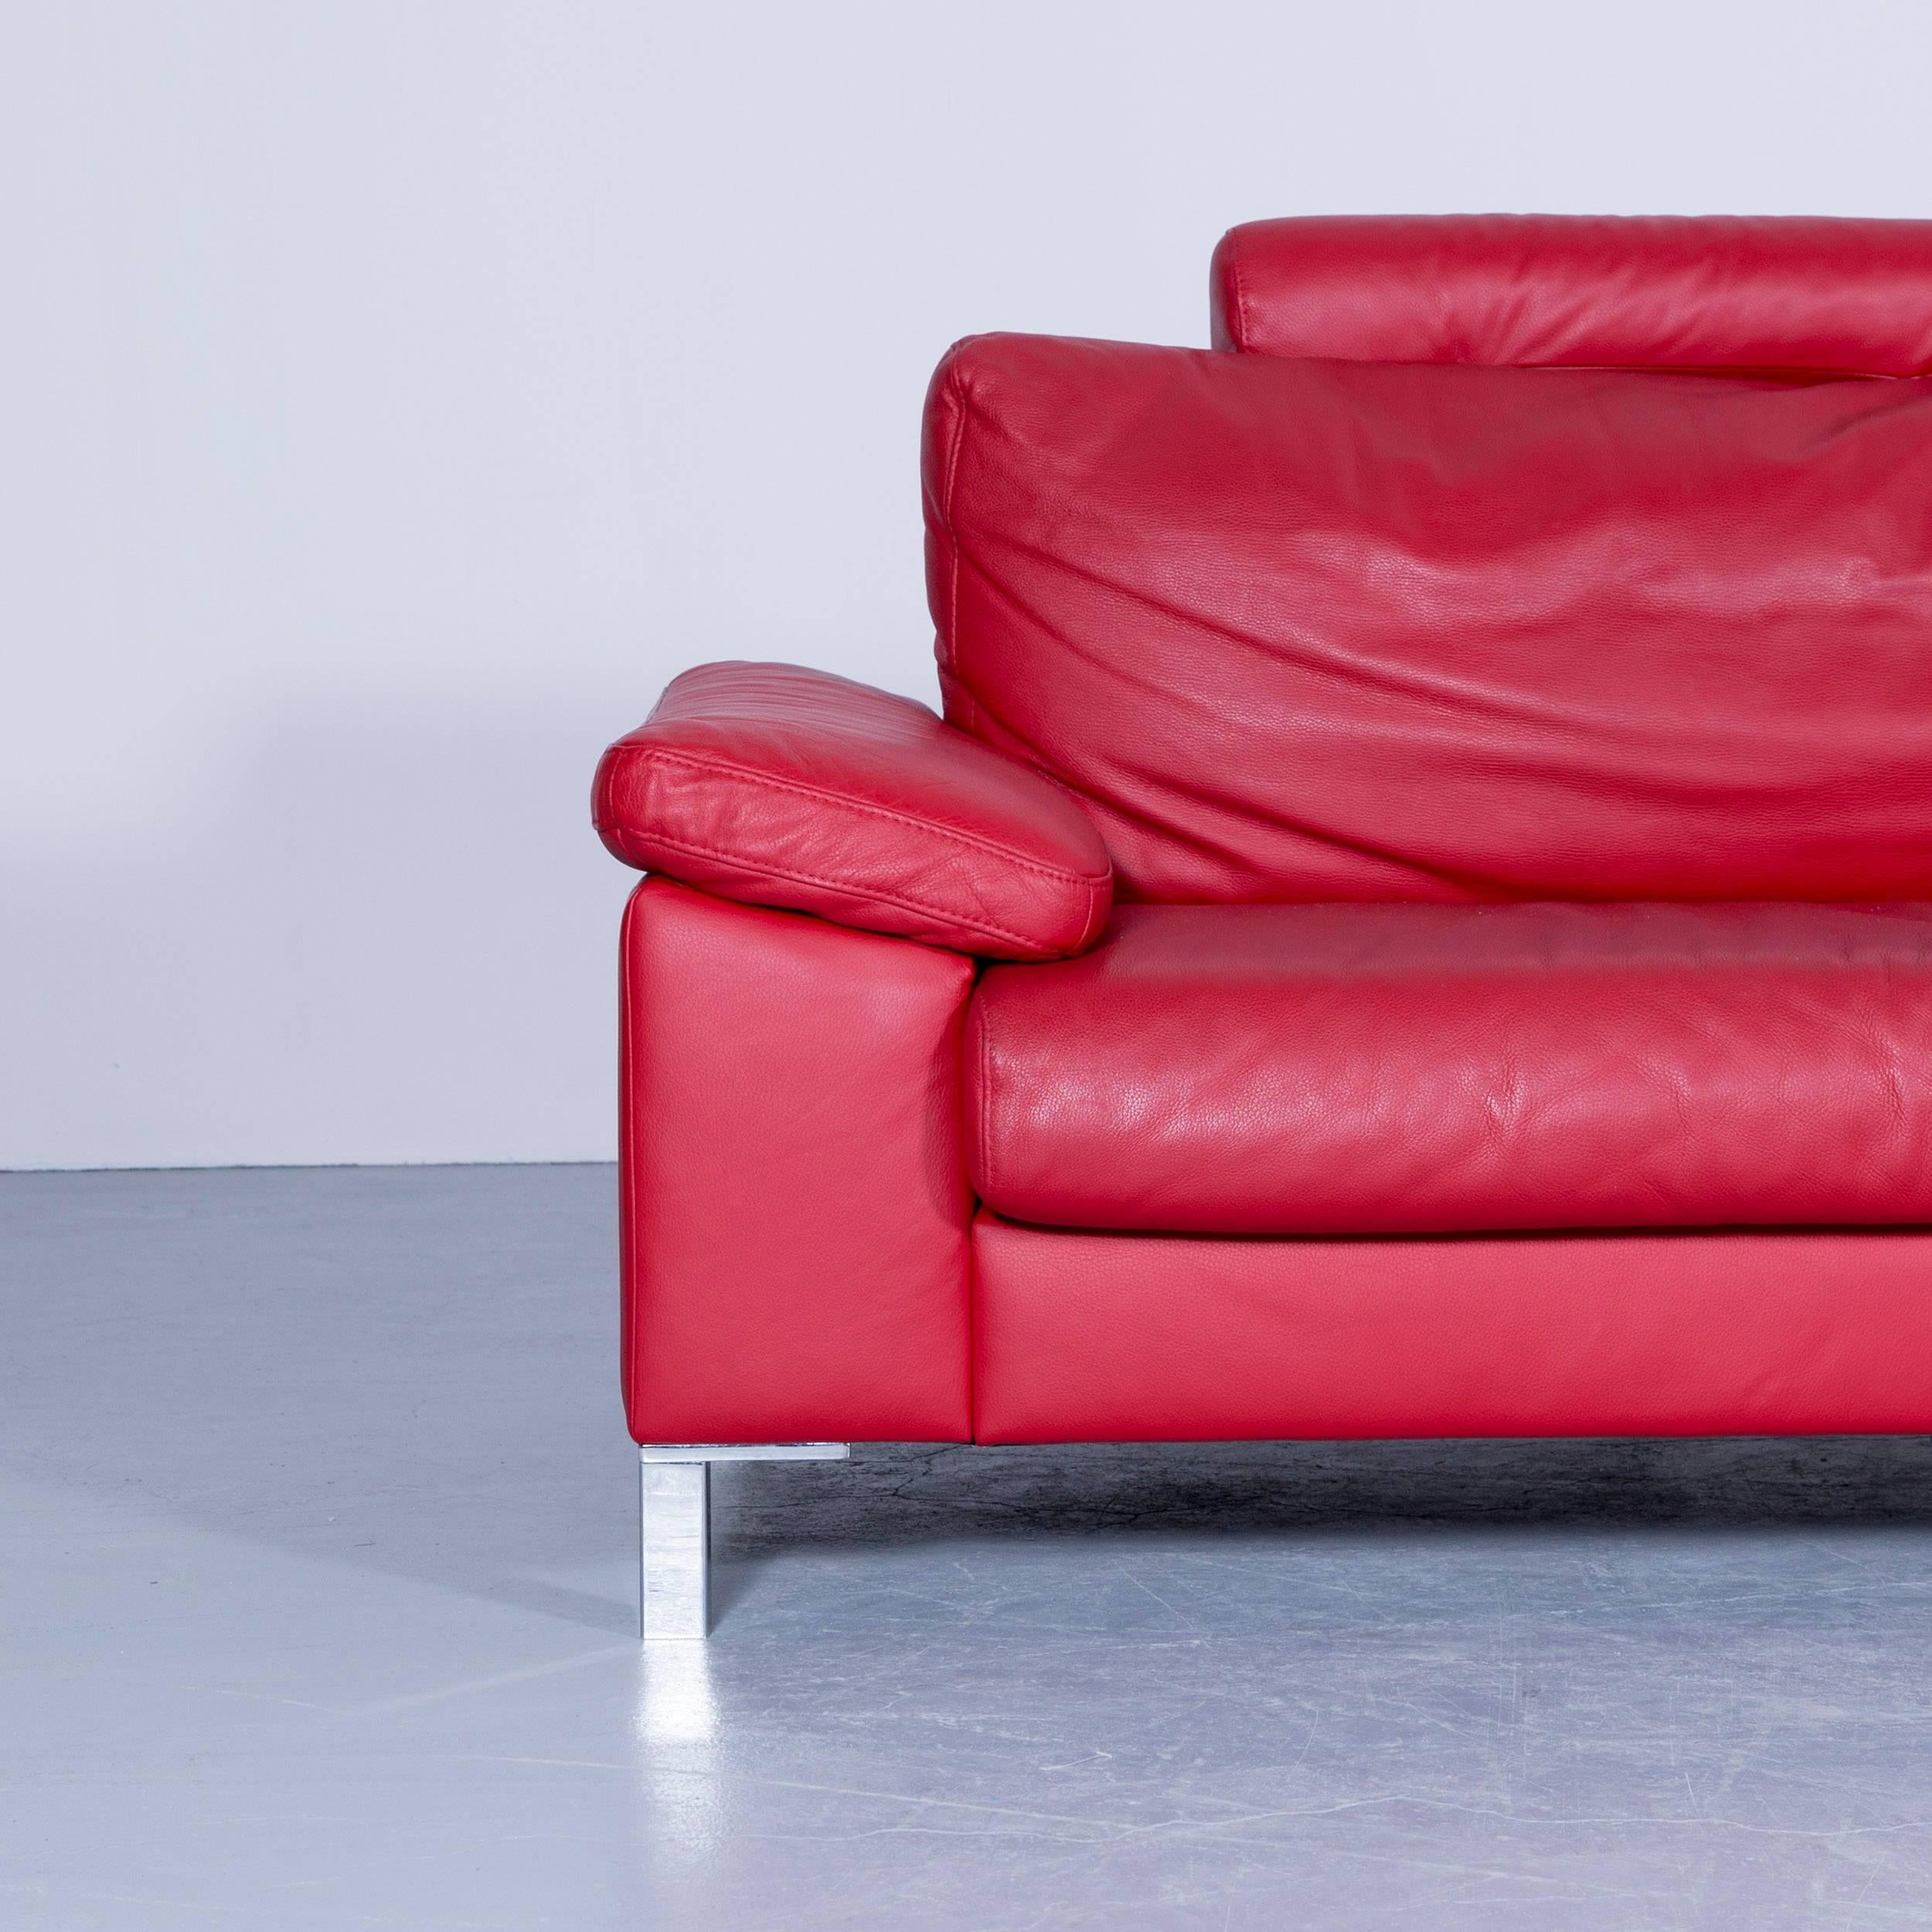 German Designer Sofa Red Three-Seat Leather Modern Couch Head Rest